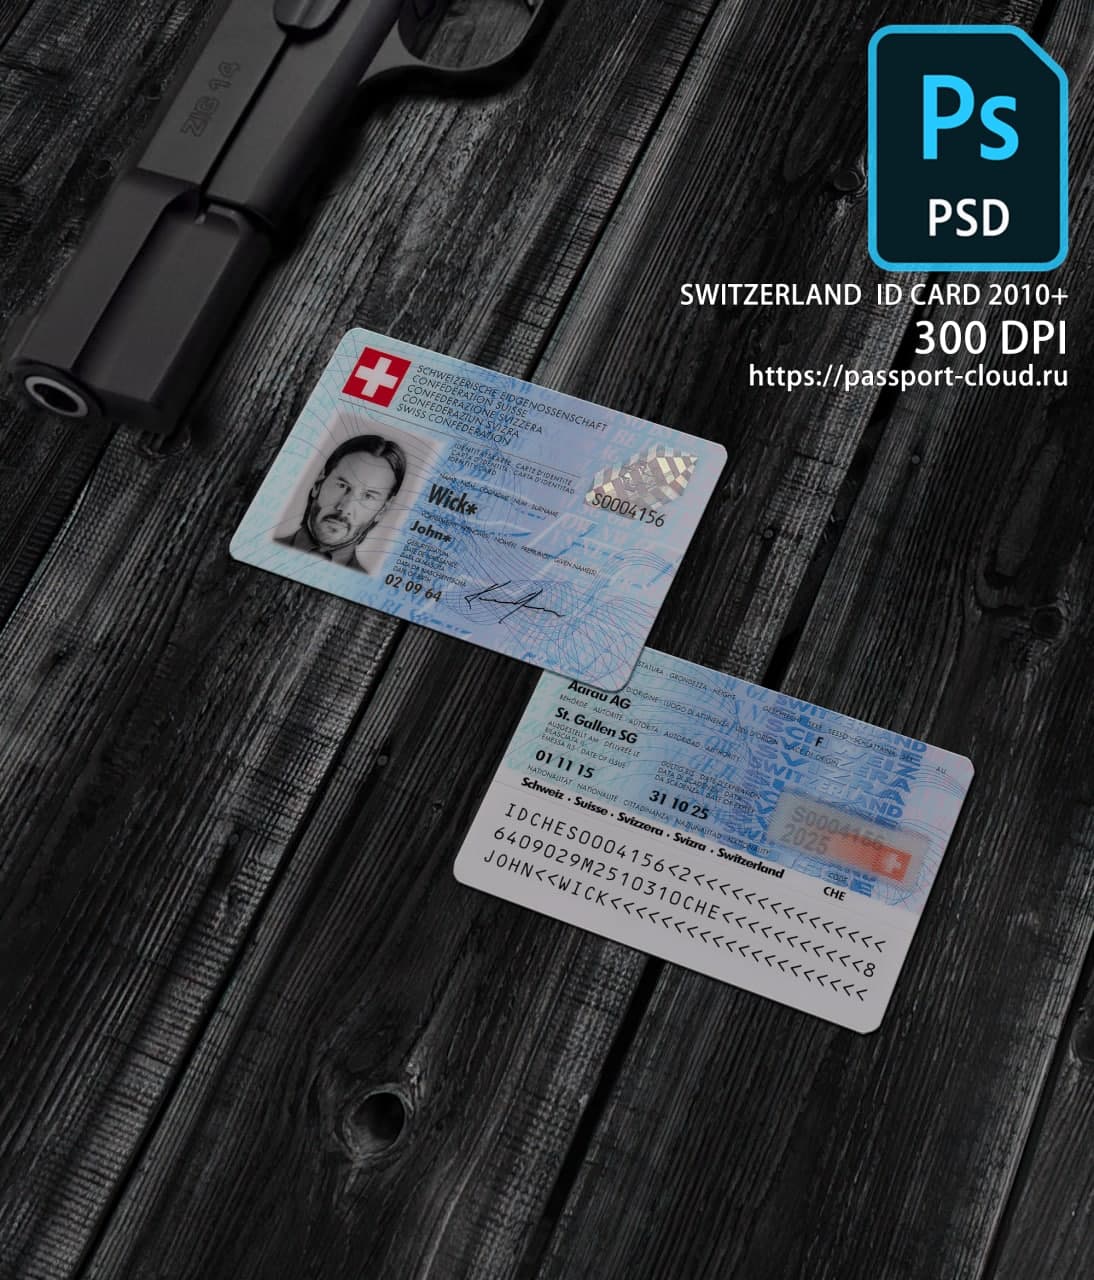 Switzerland ID Card 2005+1